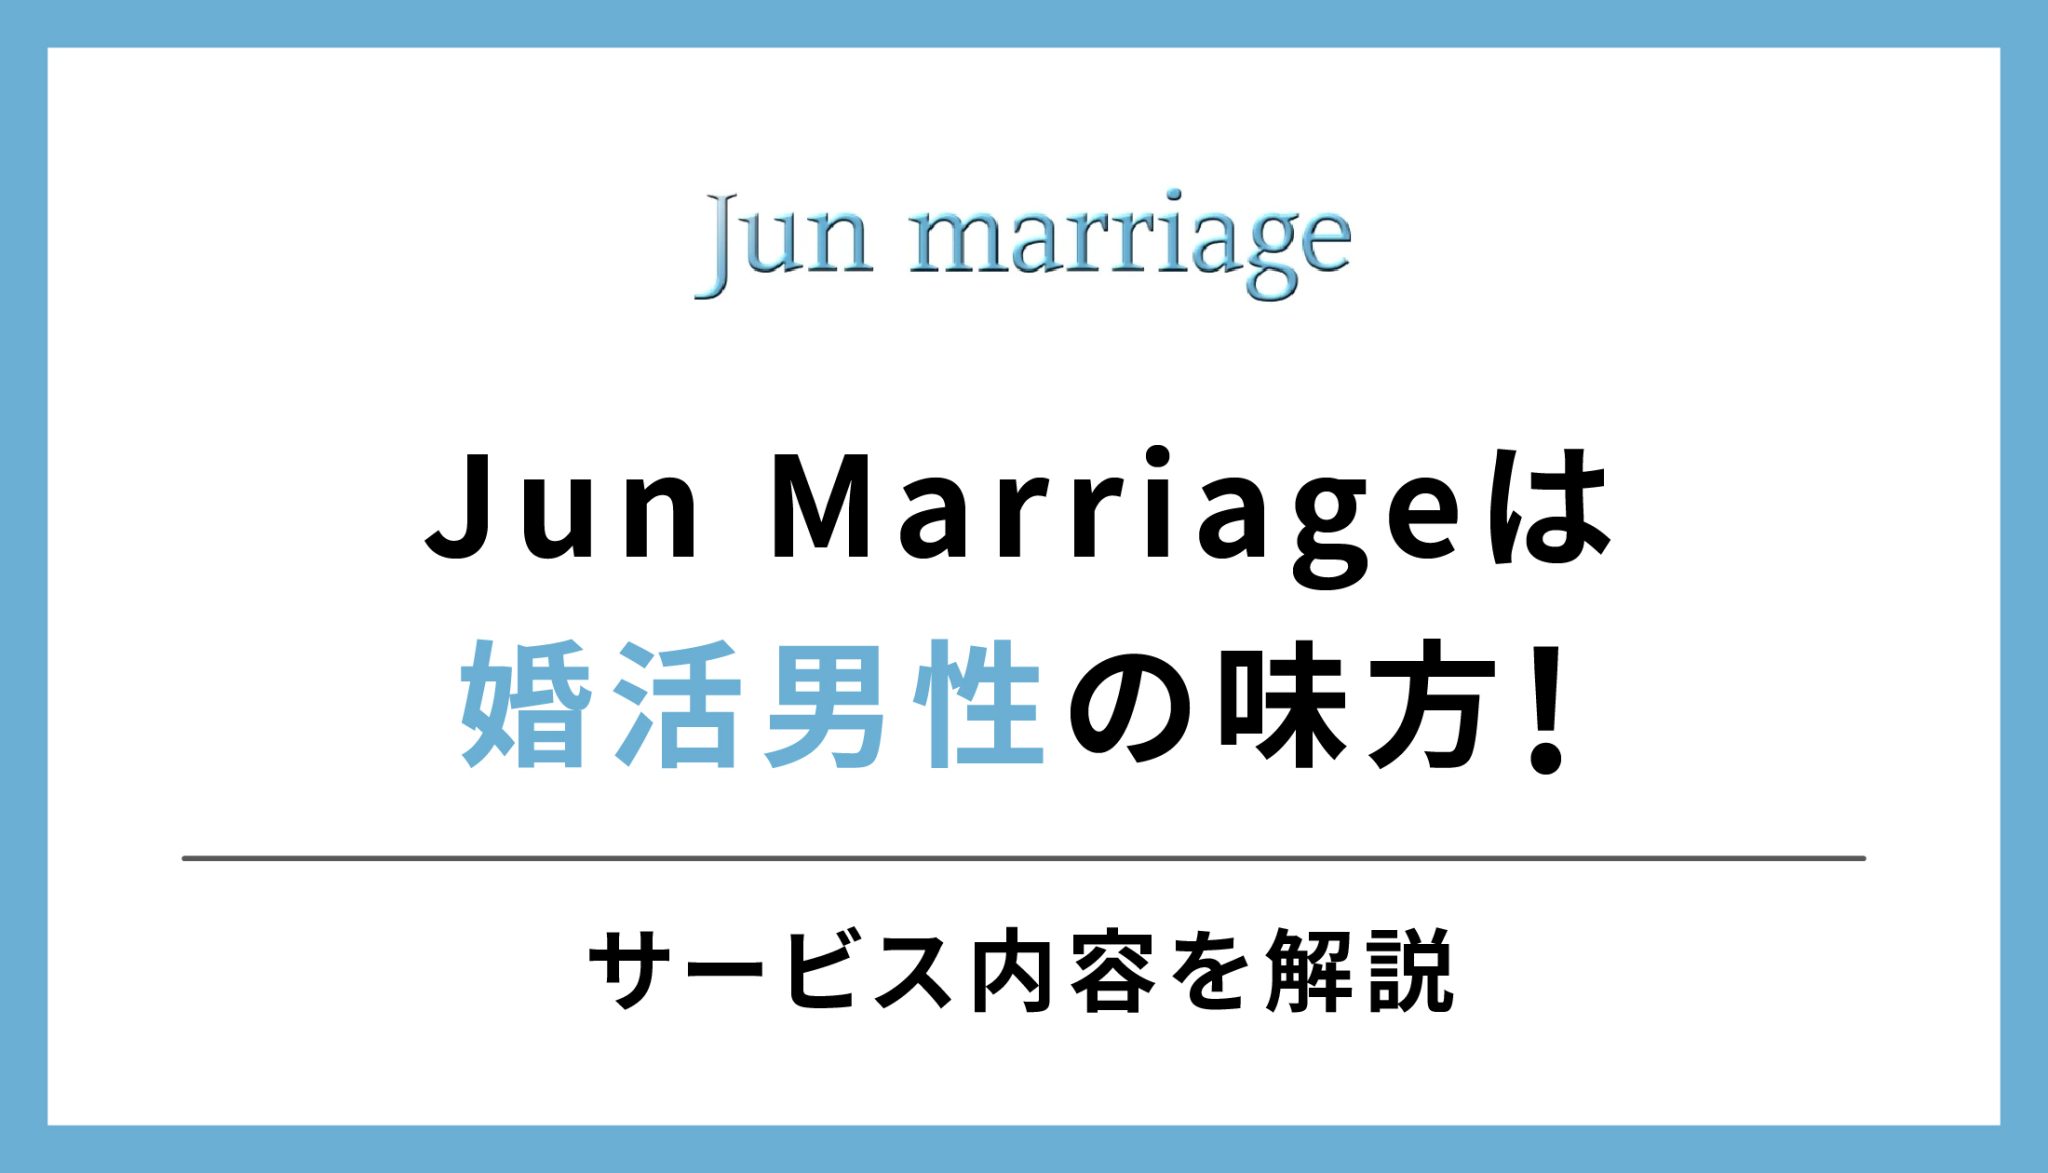 Jun Marrigeは婚活男性の味方